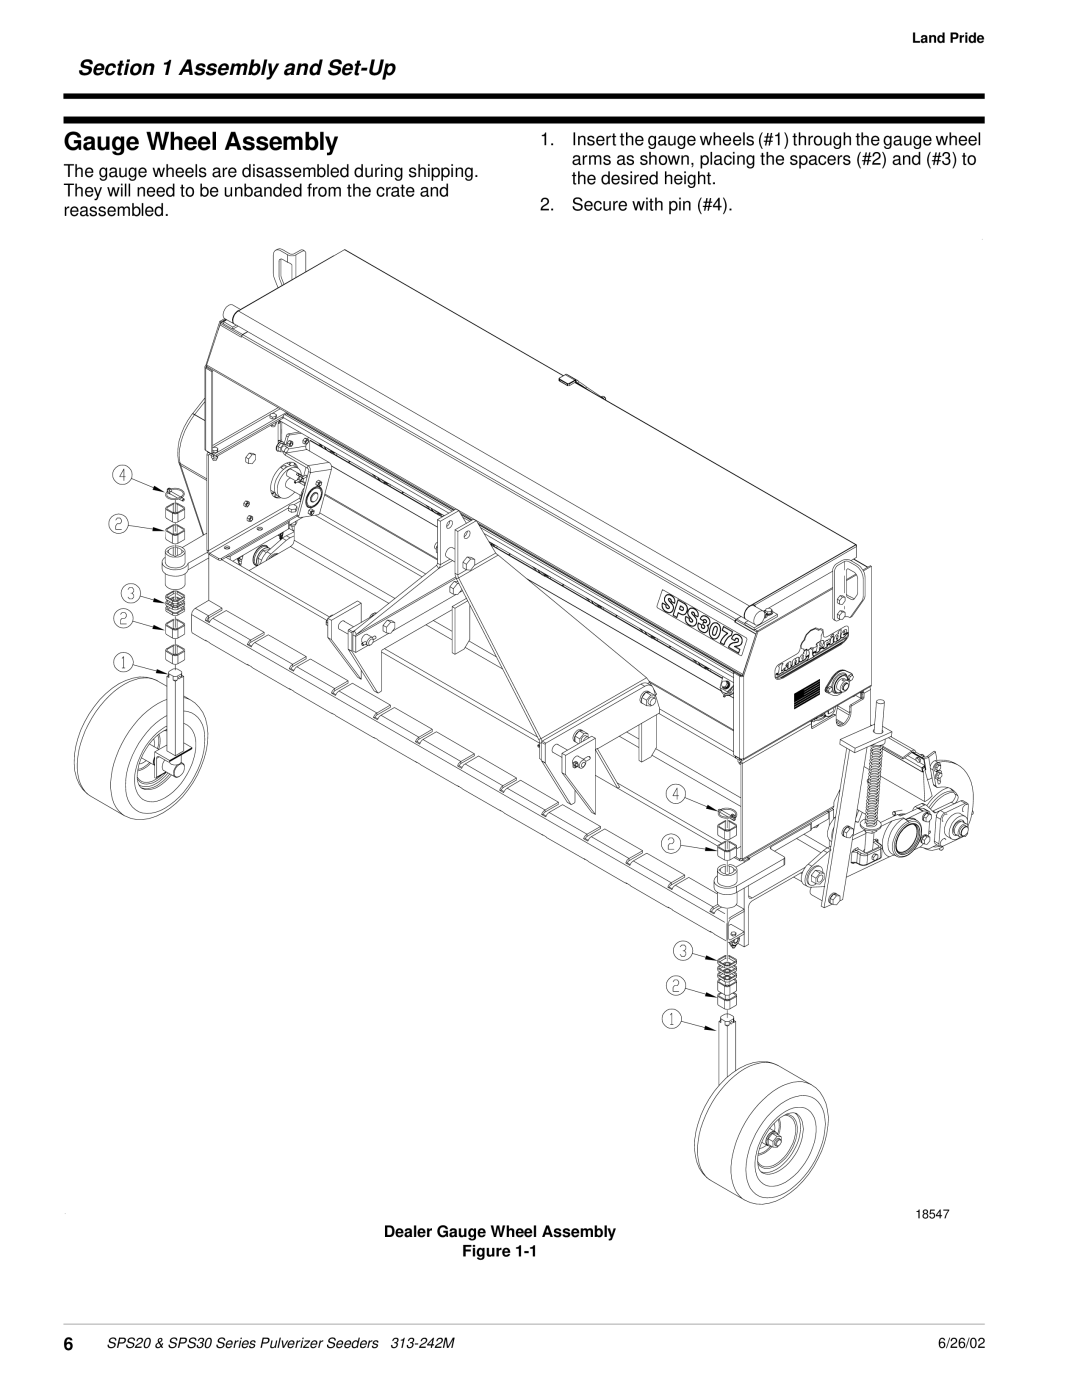 Land Pride SPS20, SPS30 manual Gauge Wheel Assembly, Assembly and Set-Up 